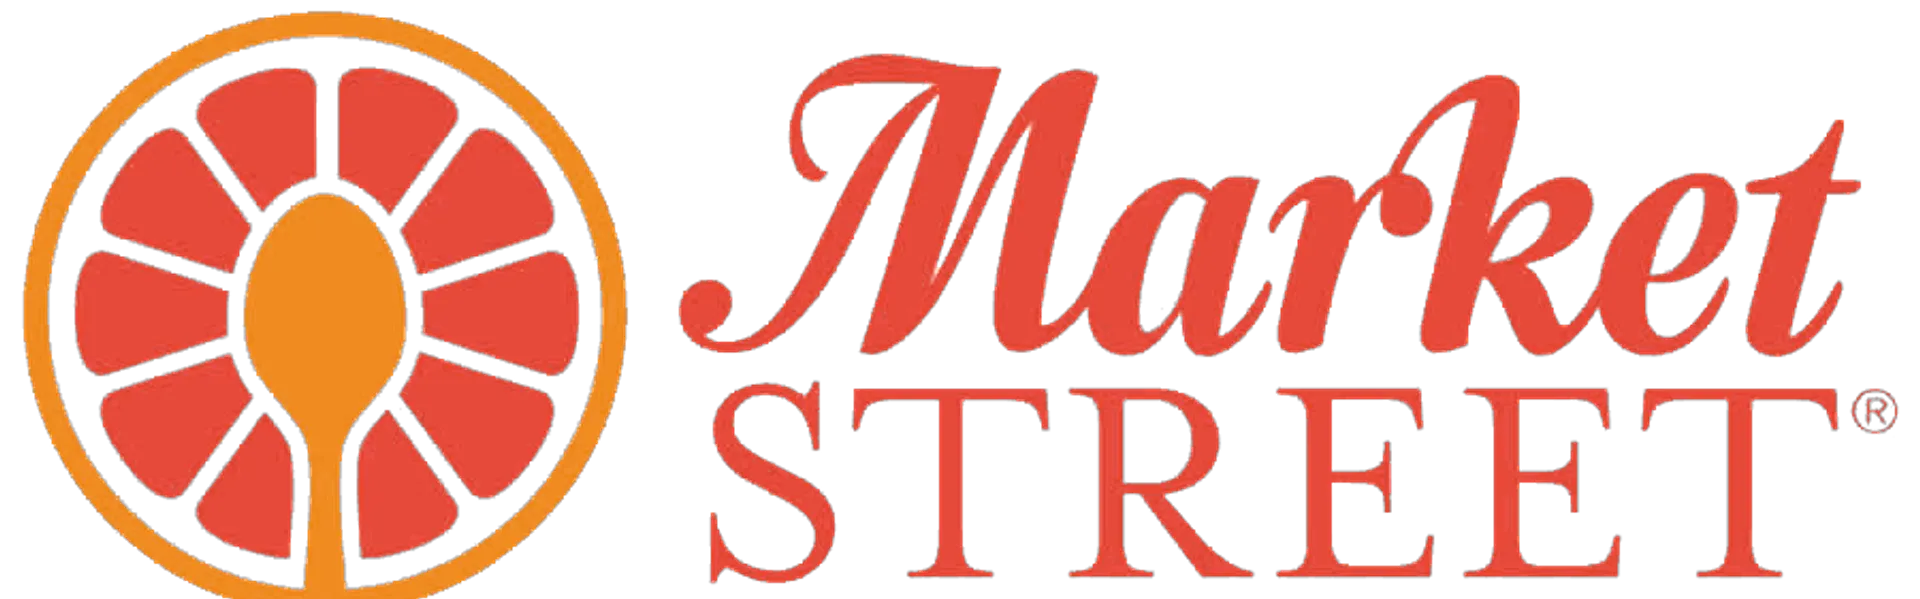 MARKET STREET logo current weekly ad